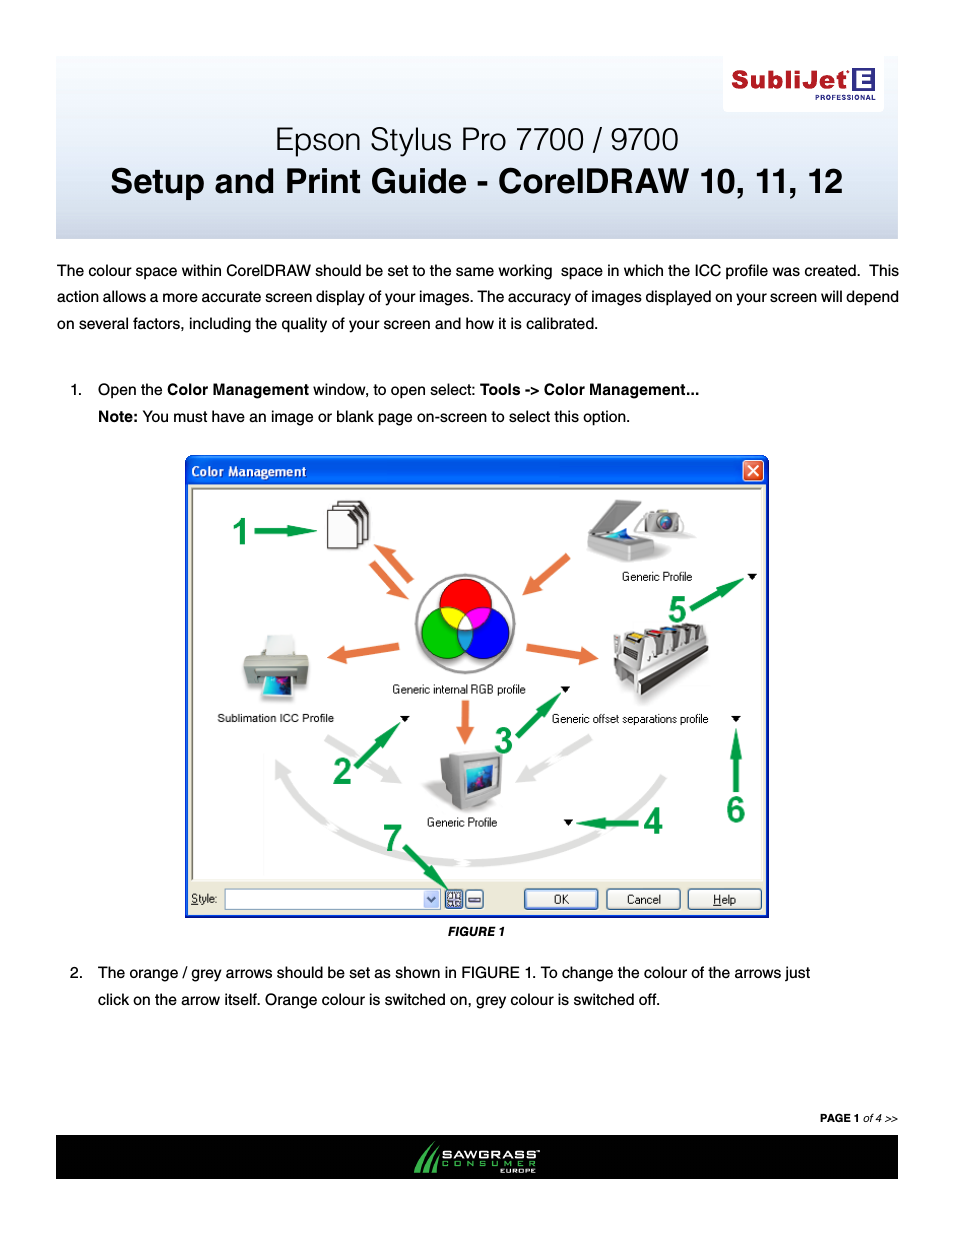 SubliJet E Epson Stylus Pro 7700 (Windows ICC Profile Setup): Print & Setup Guide CorelDRAW 10 - 12